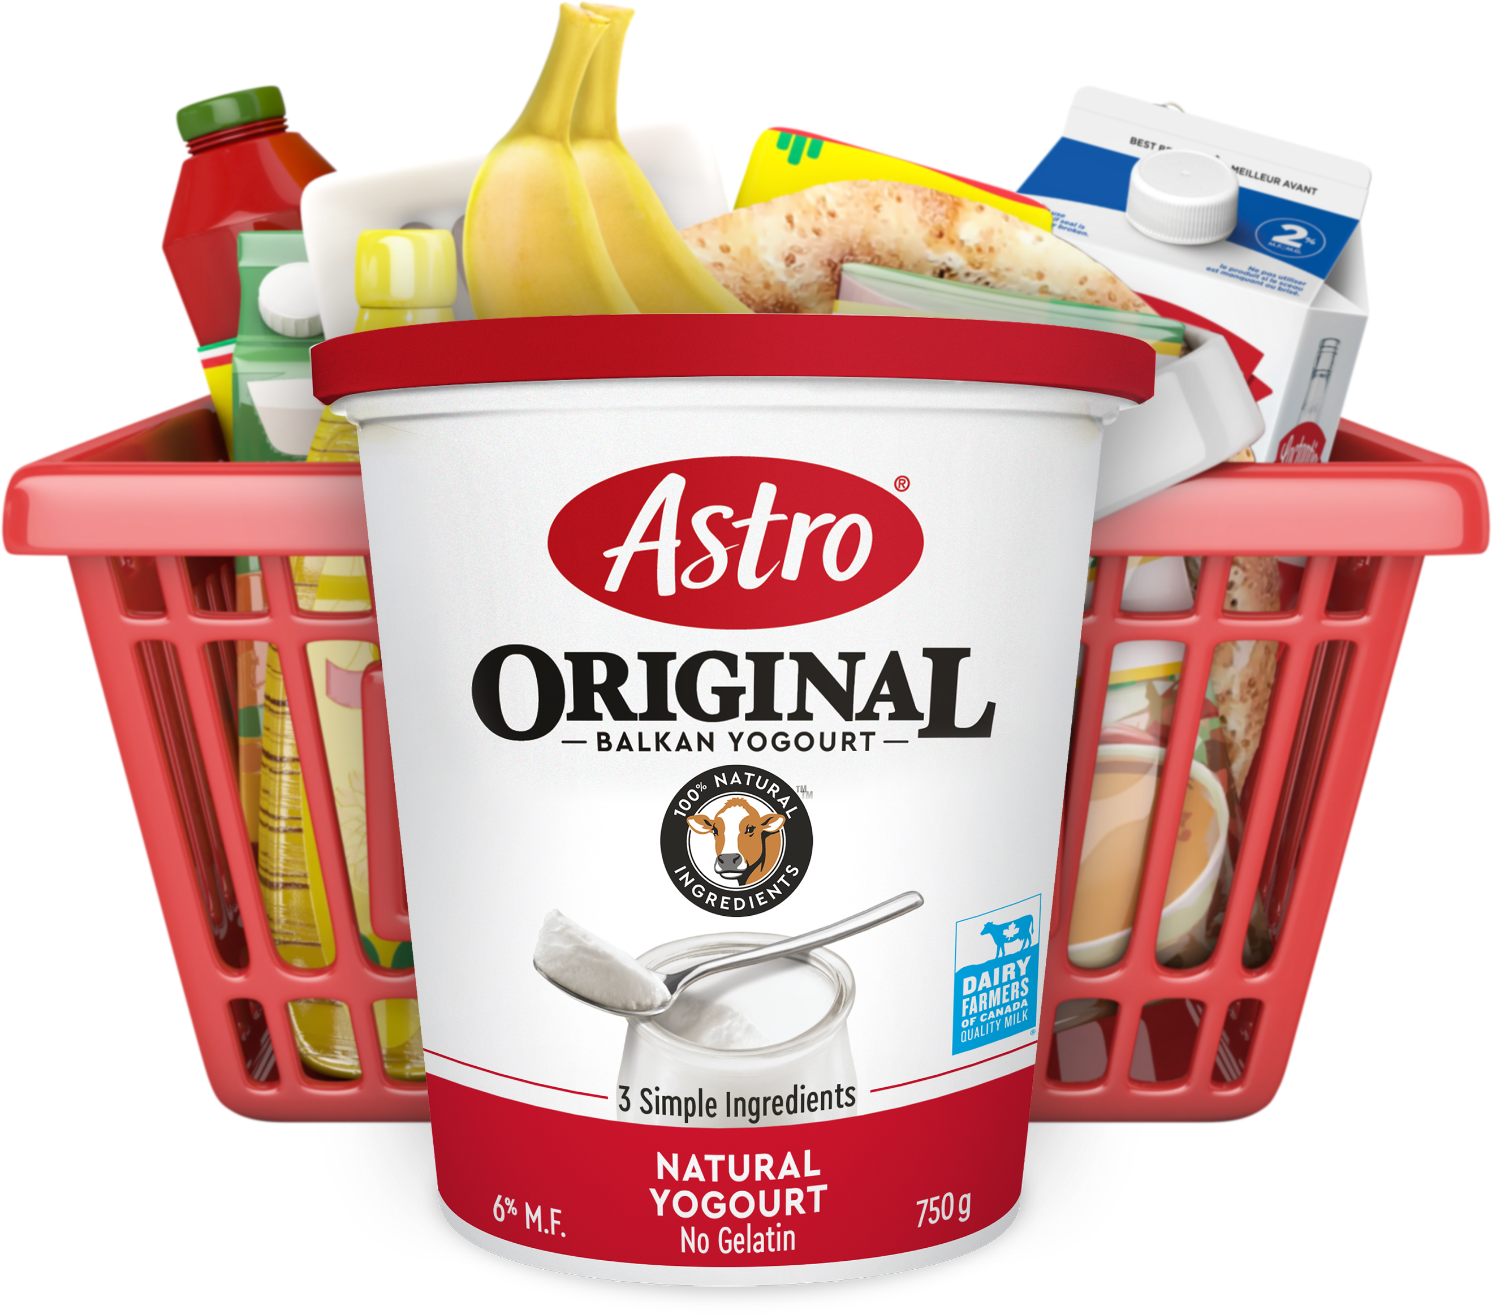 Astro yogurt in front of a basket of groceries